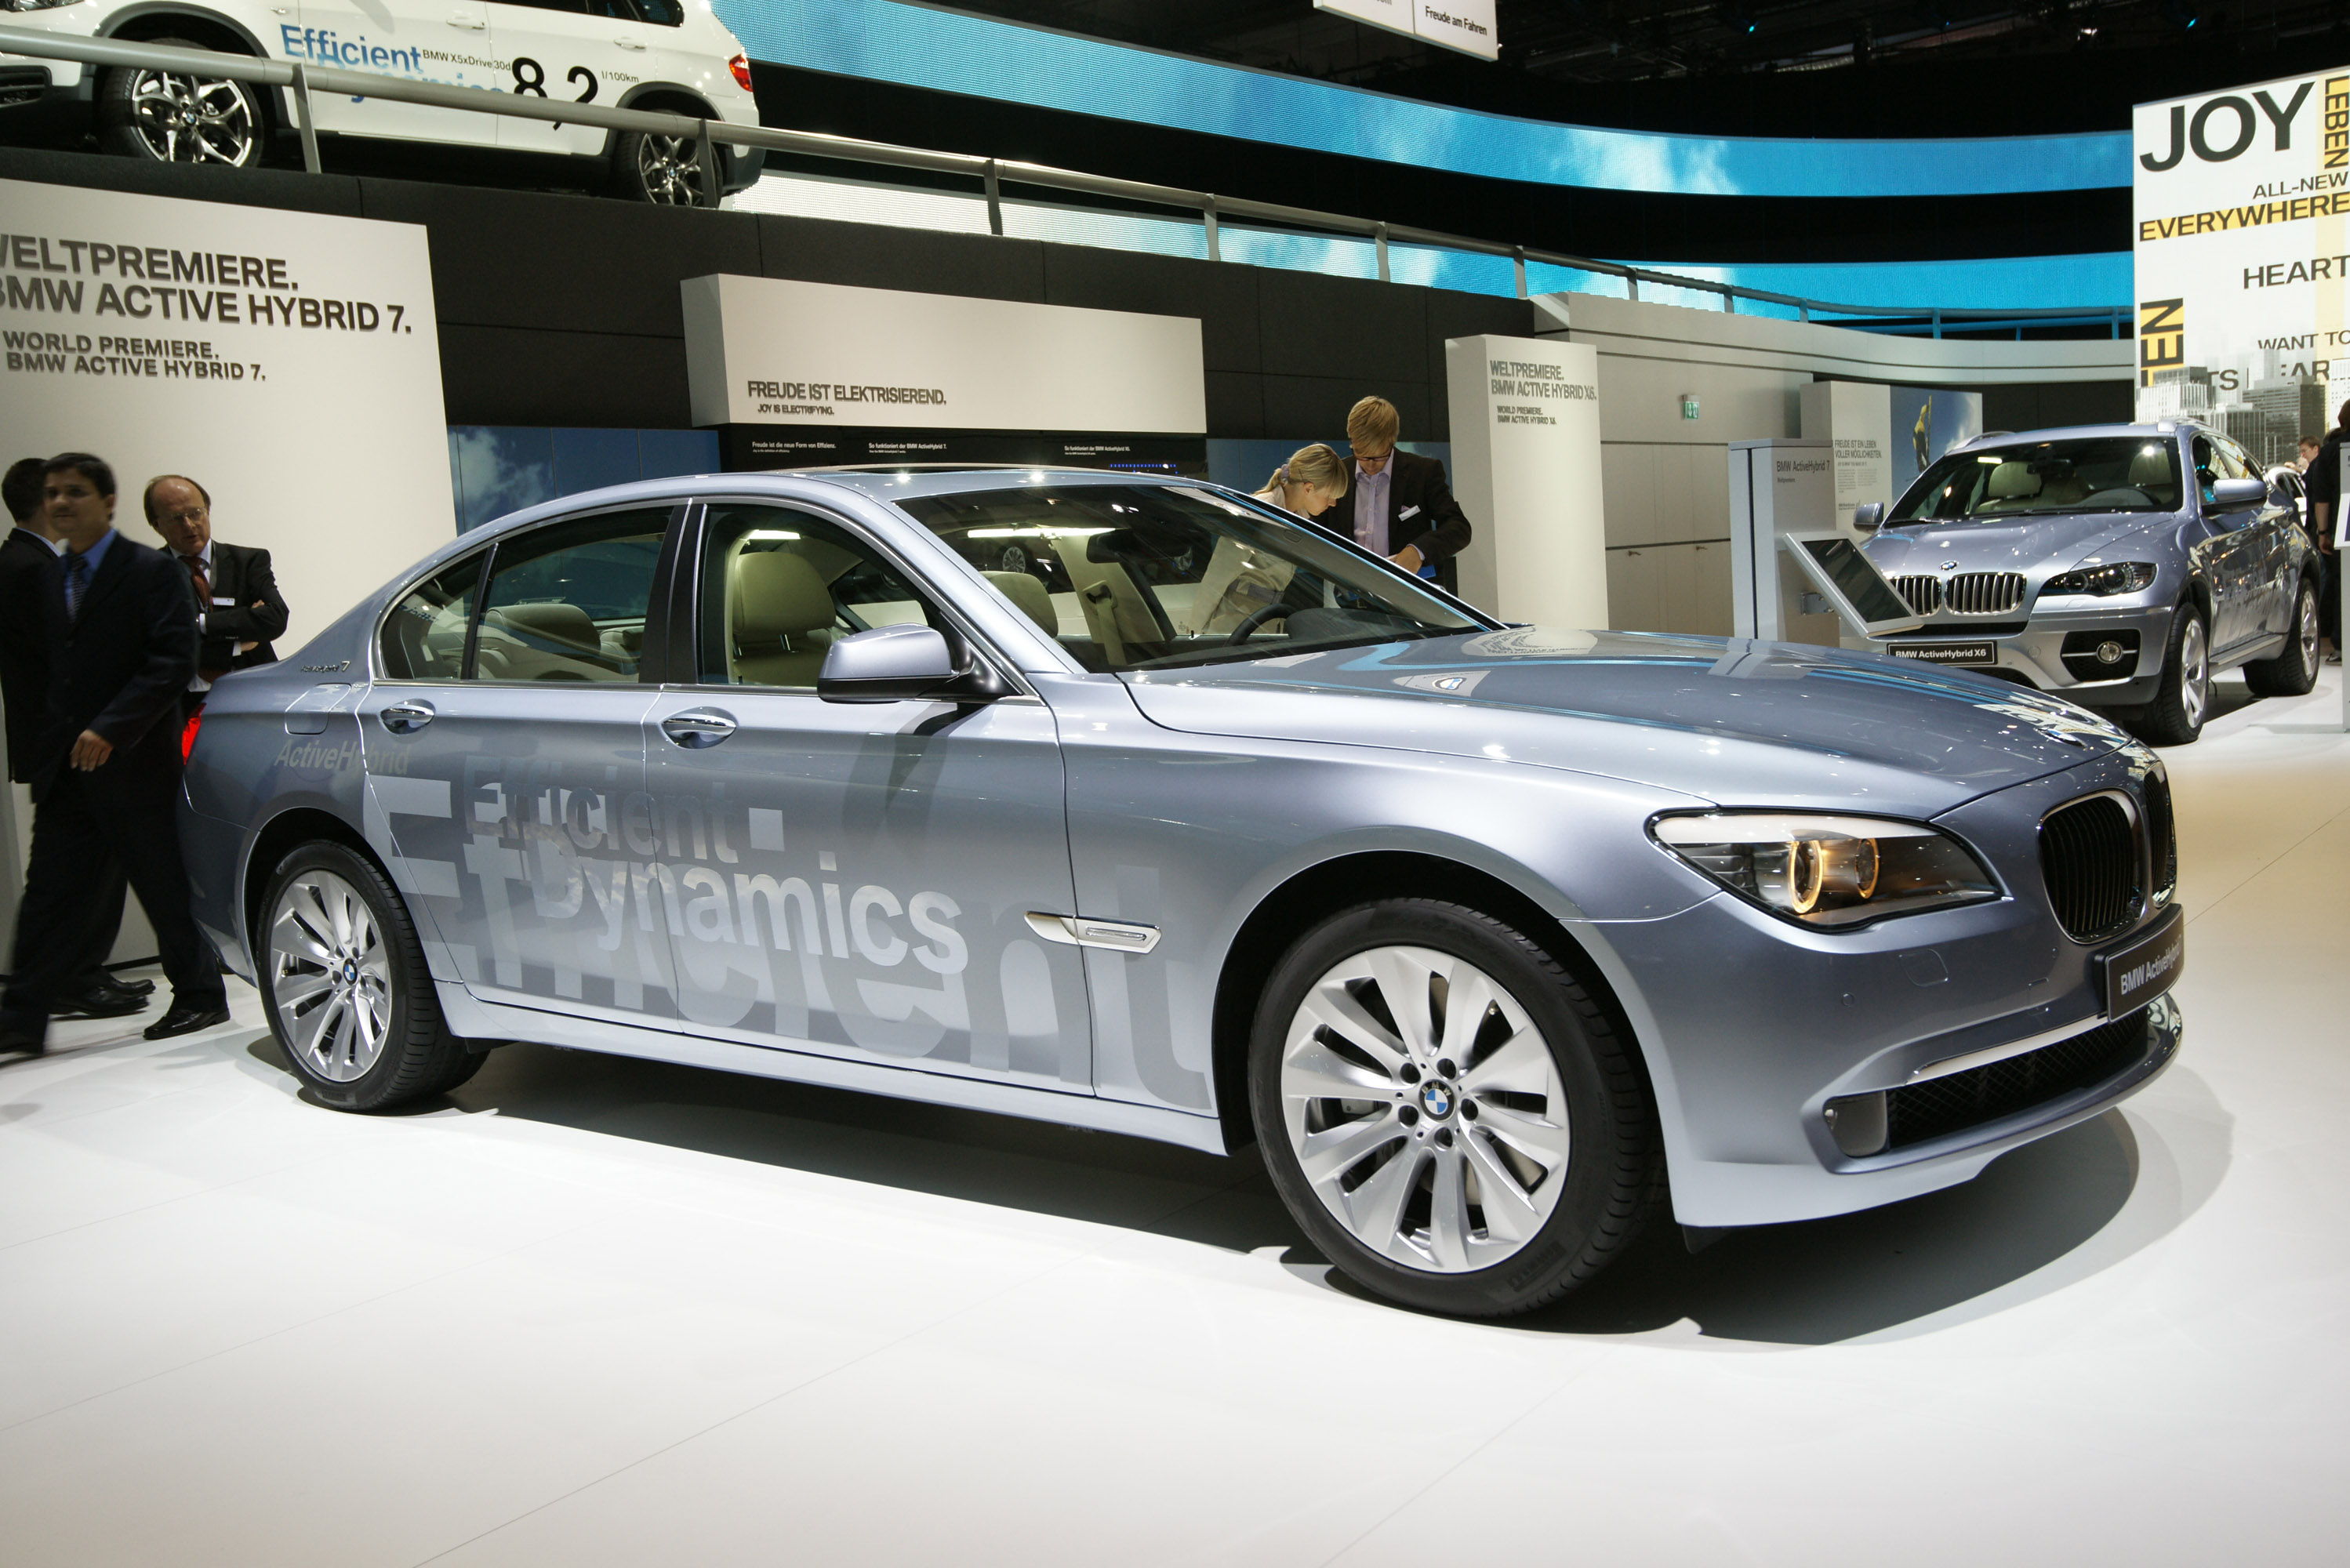 BMW 7-Series EfficientDynamics Frankfurt